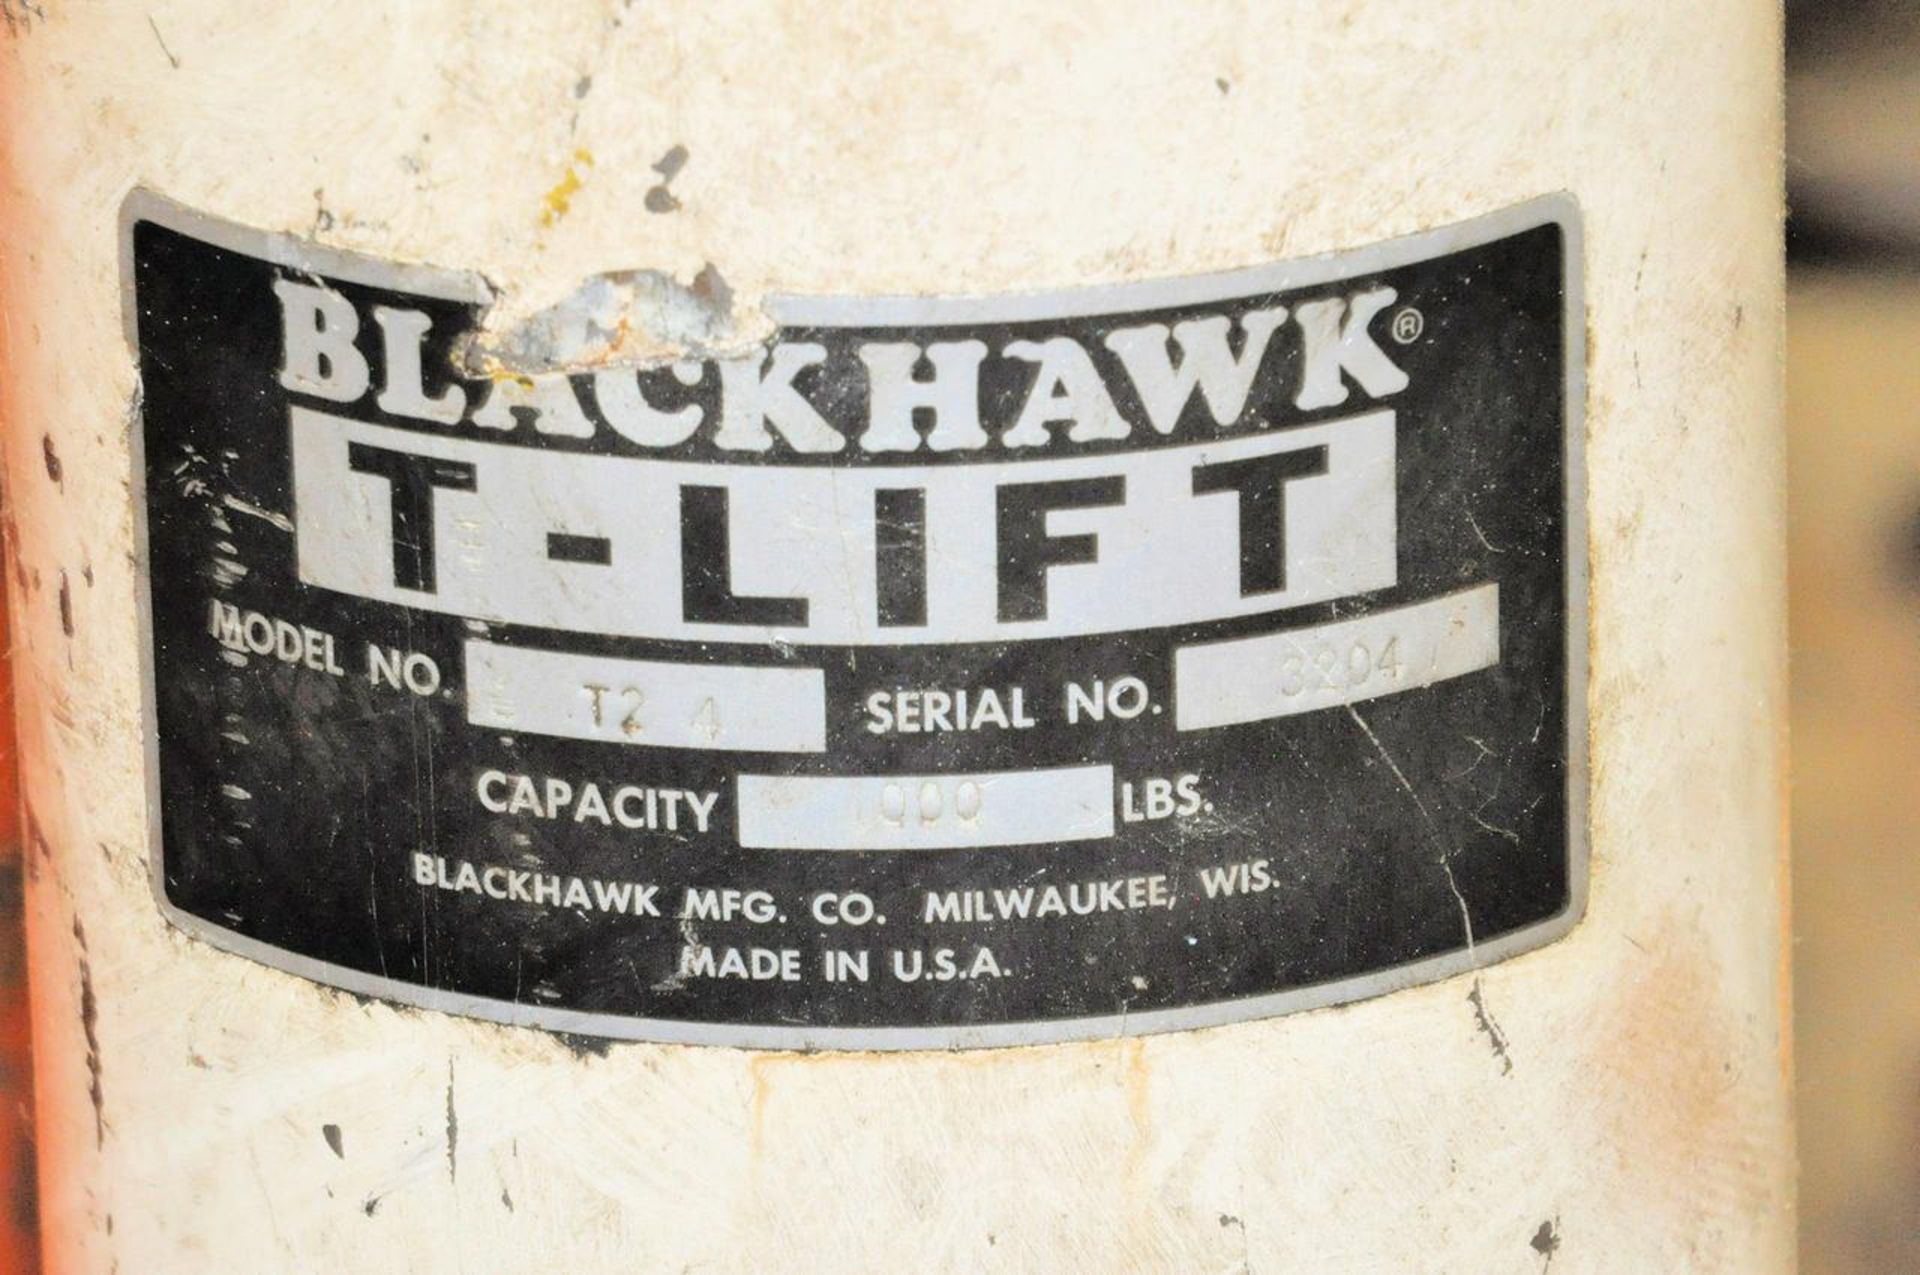 Blackhawk 12 T-Lift 1,000 LB Capacity Transmission Jack - Image 2 of 2